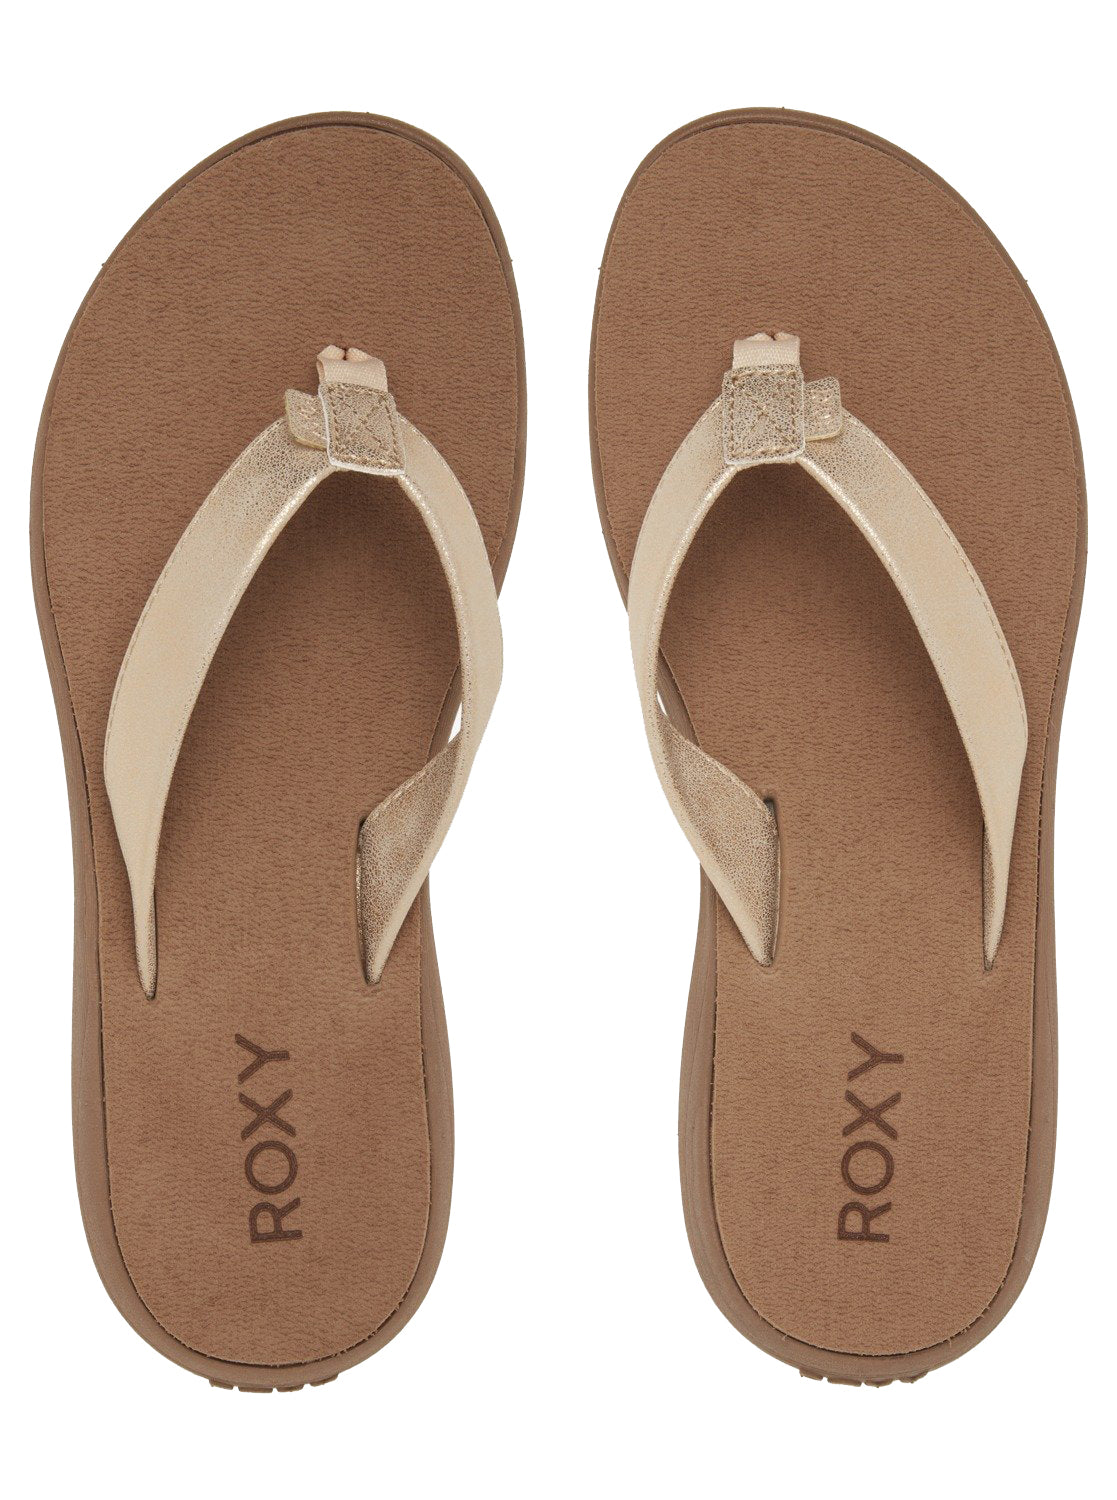 Roxy Lizzie Womens Sandal BRO-Bronze 7